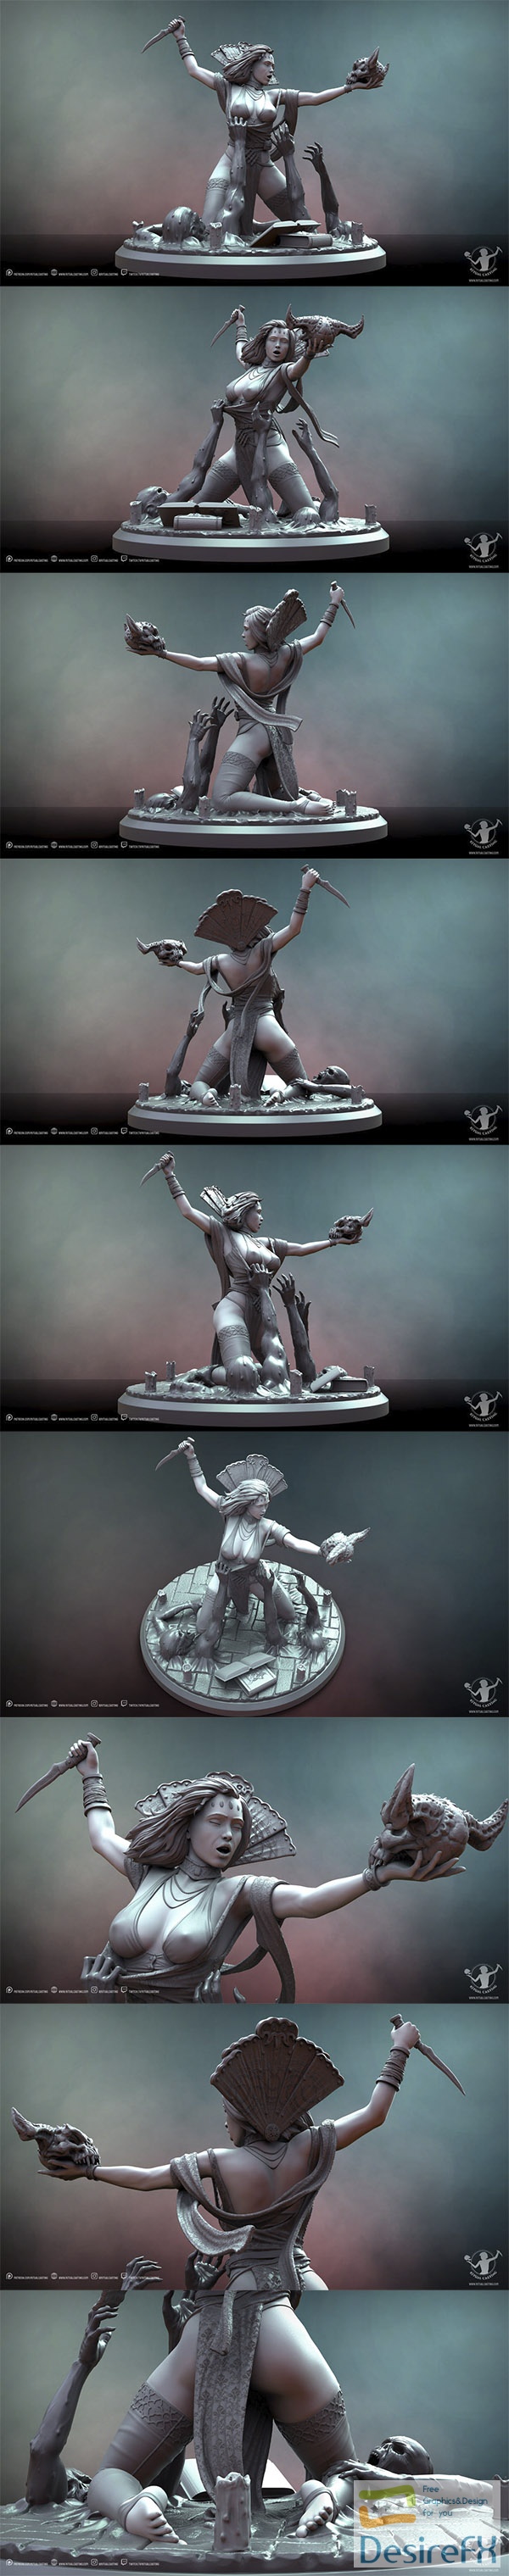 Ritual Casting - The Ritual - Statue - 3D Print